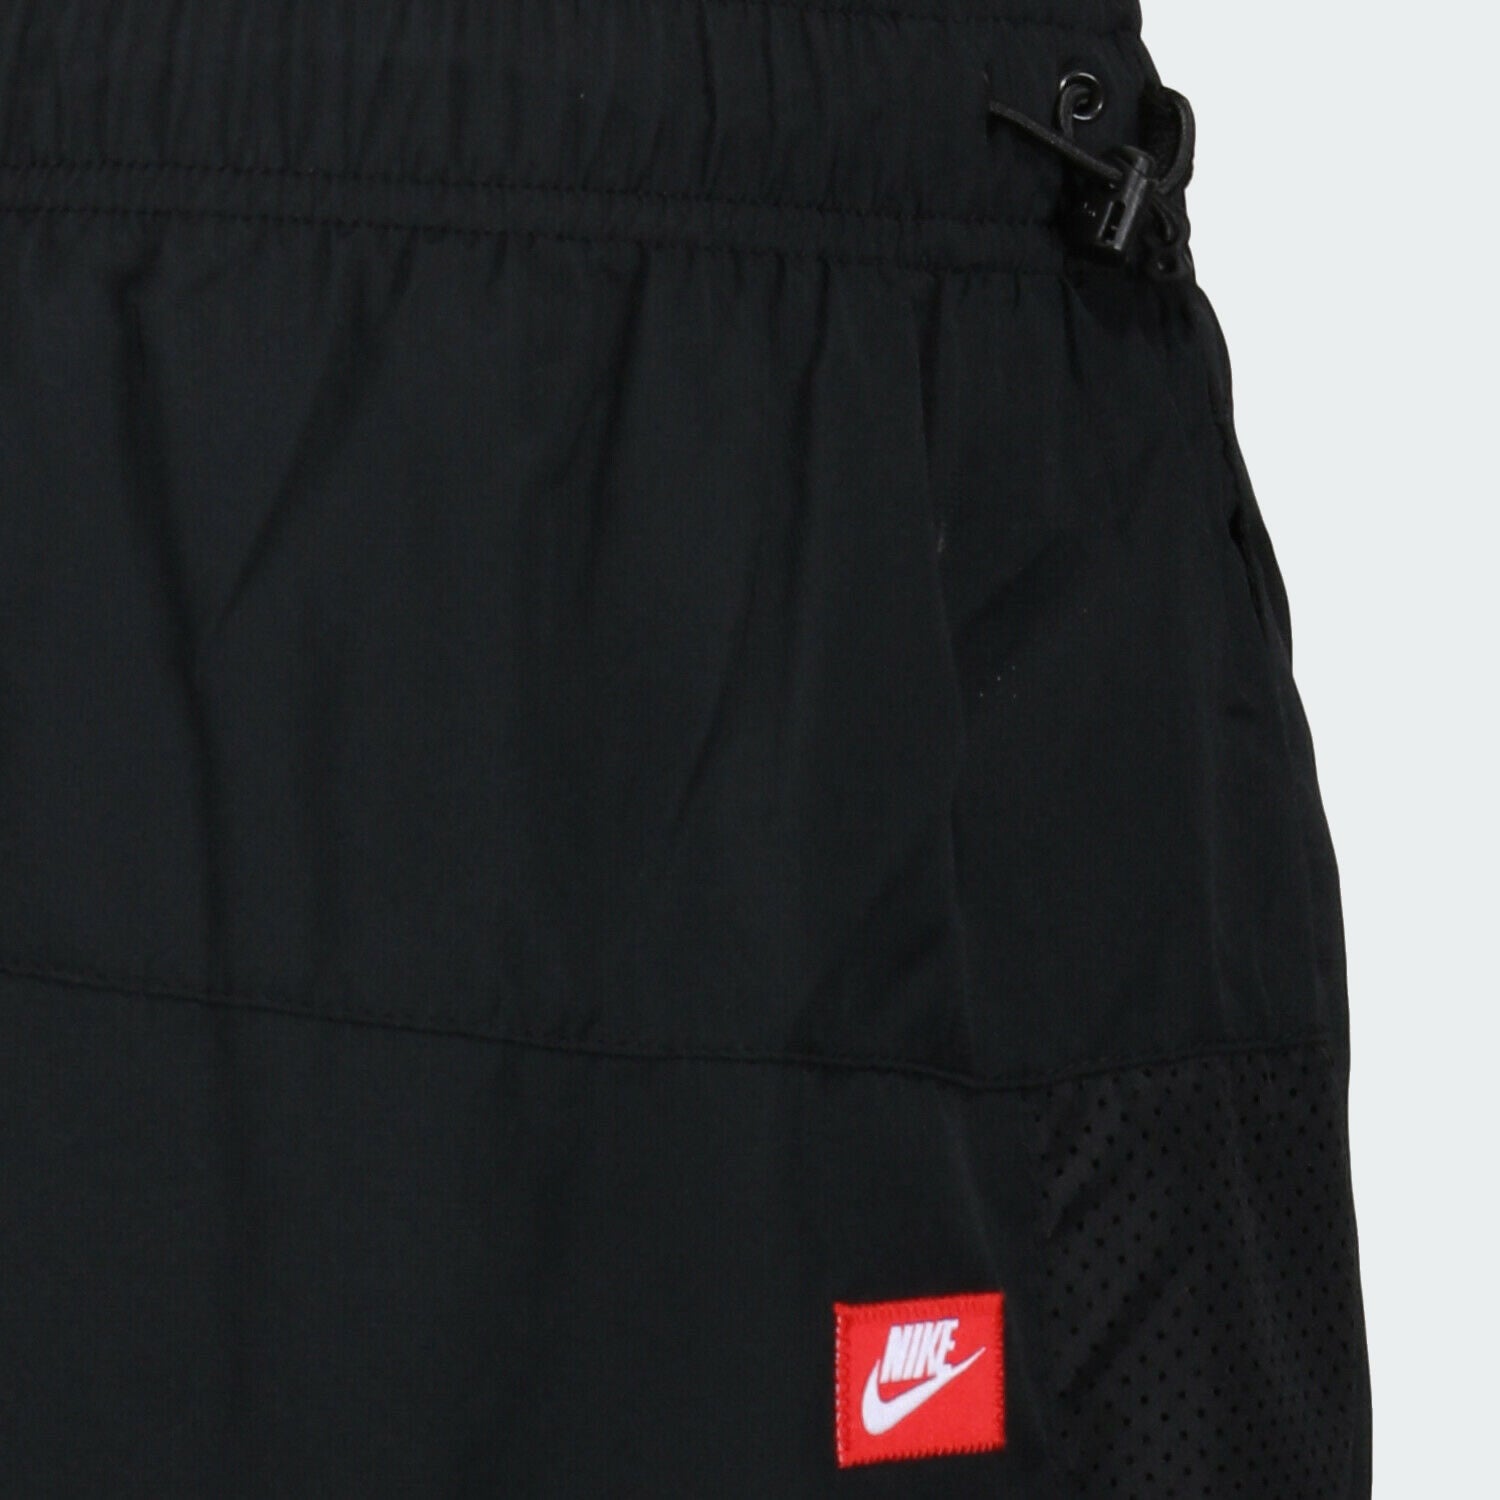 tradesports.co.uk Nike Men's Air Woven Cuffed Track Pants 603260 010